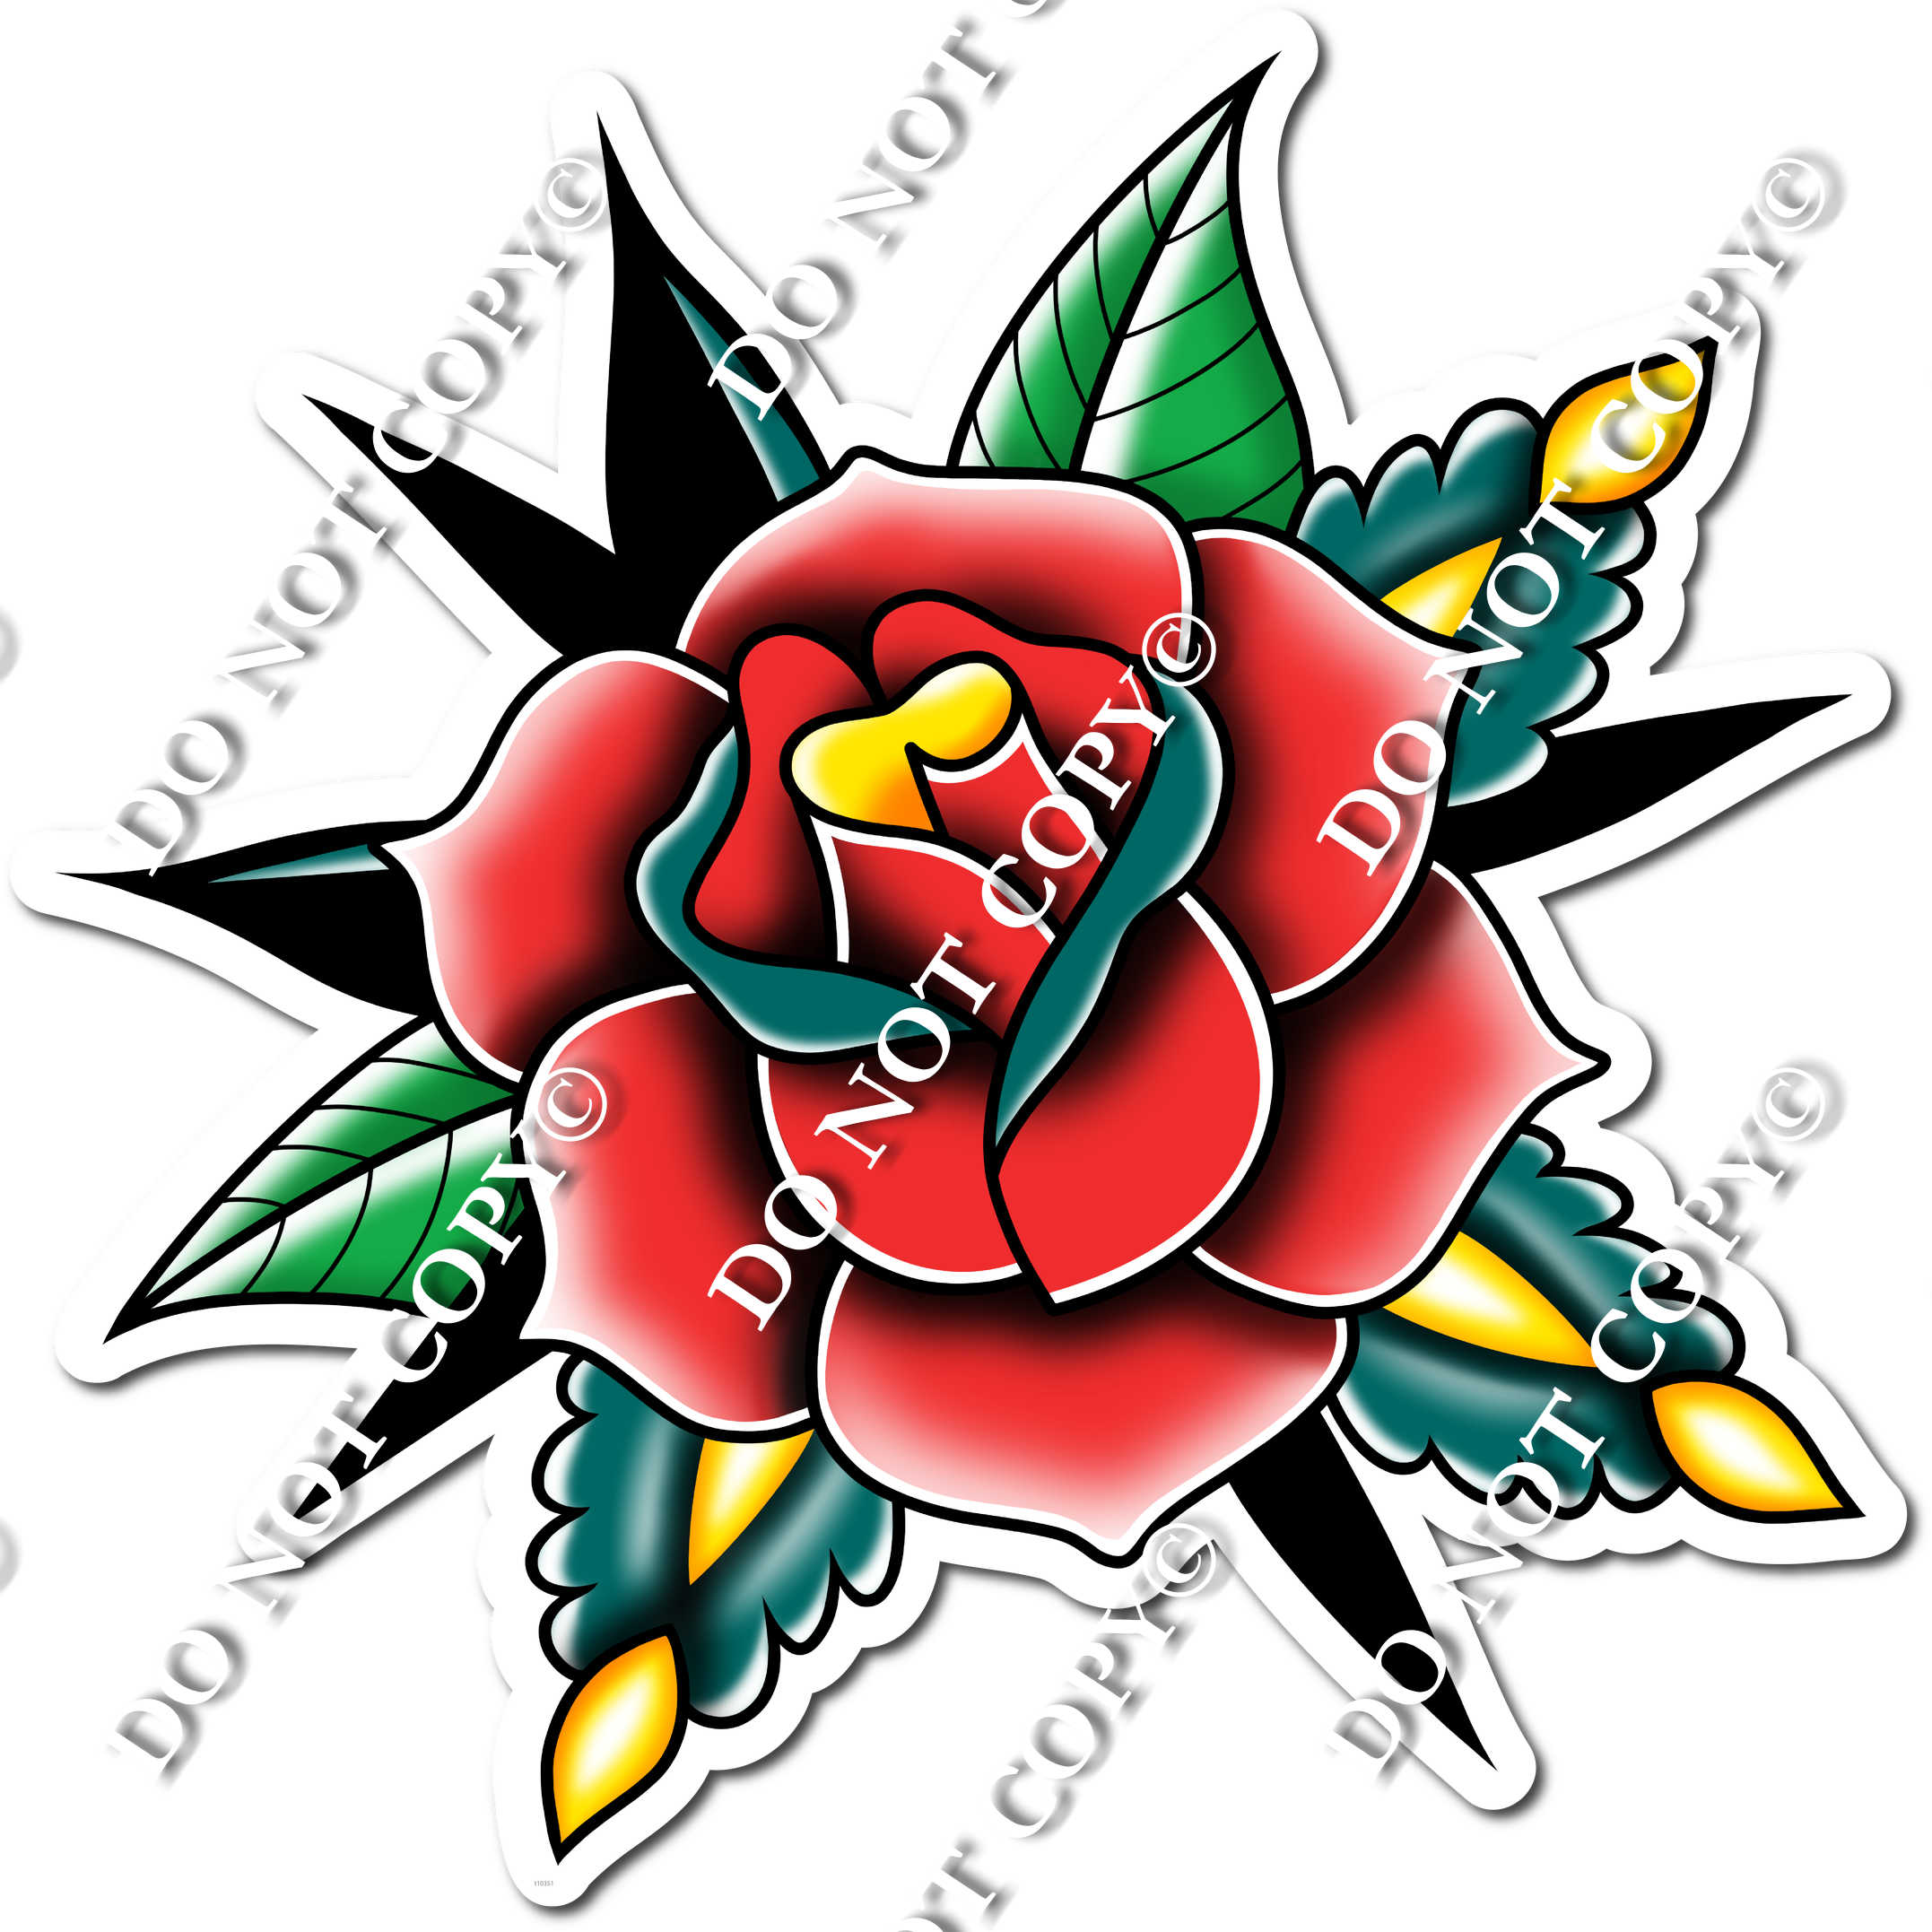 Isadora Vintage Floral Rose Temporary Tattoo – MyBodiArt